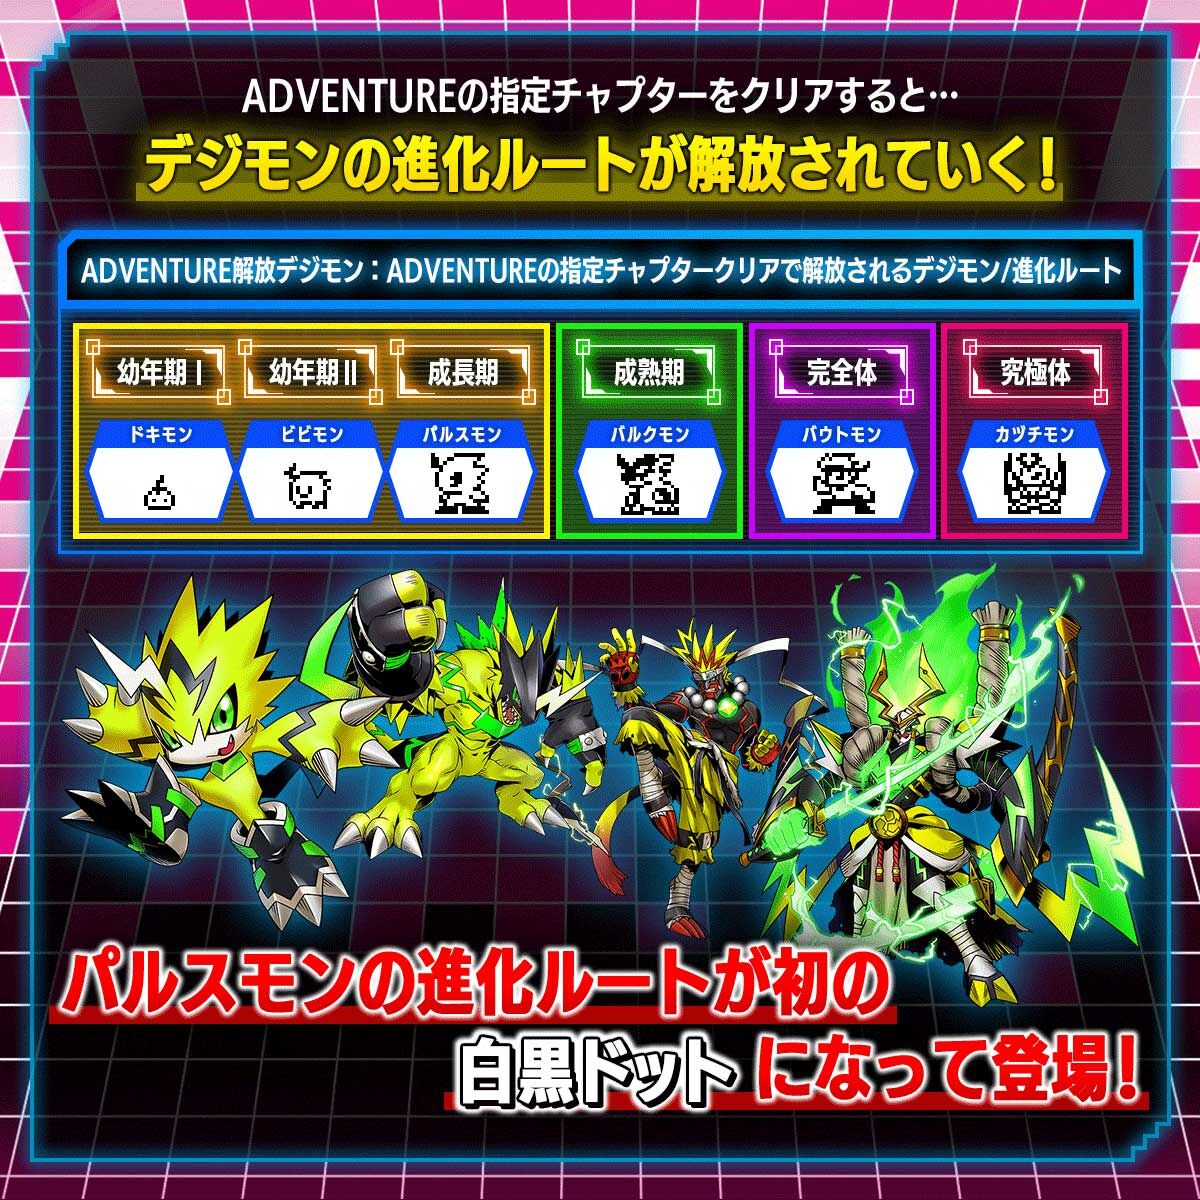 Digimon Vital Brace BE 25th Anniversary Set